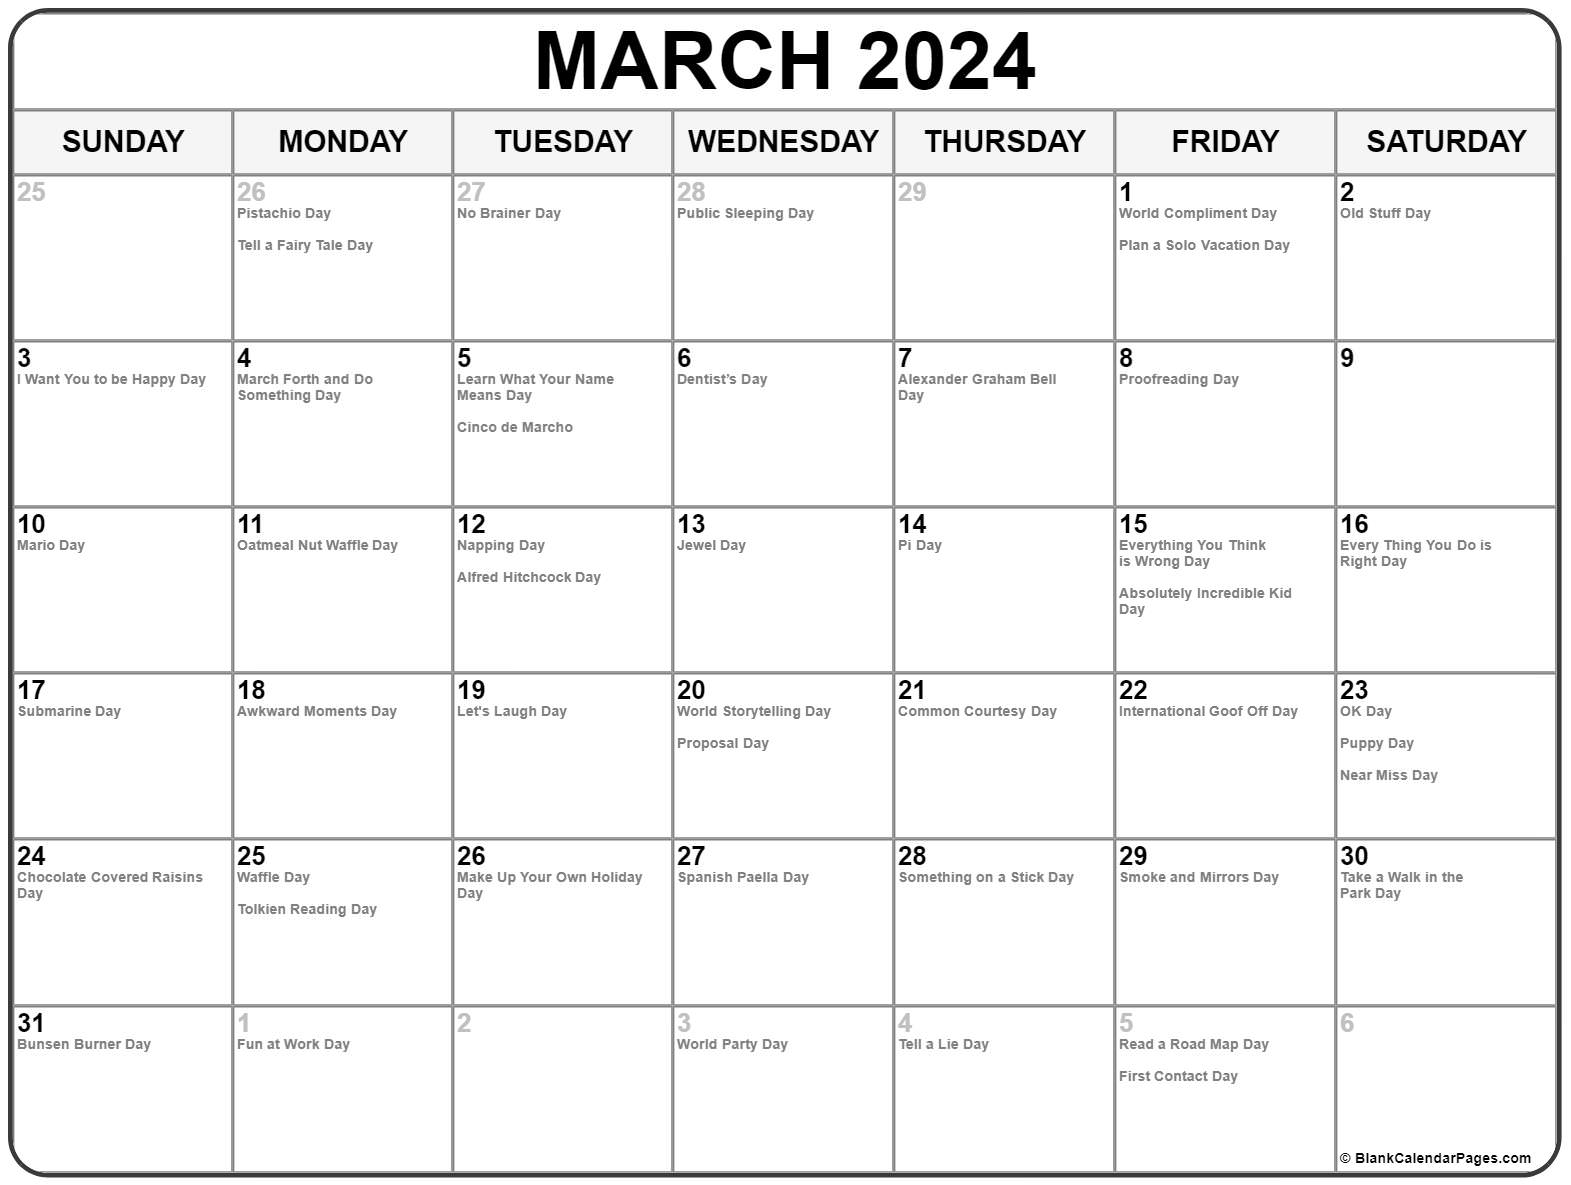 March 2024 Events Calendar Tobye Gloriane